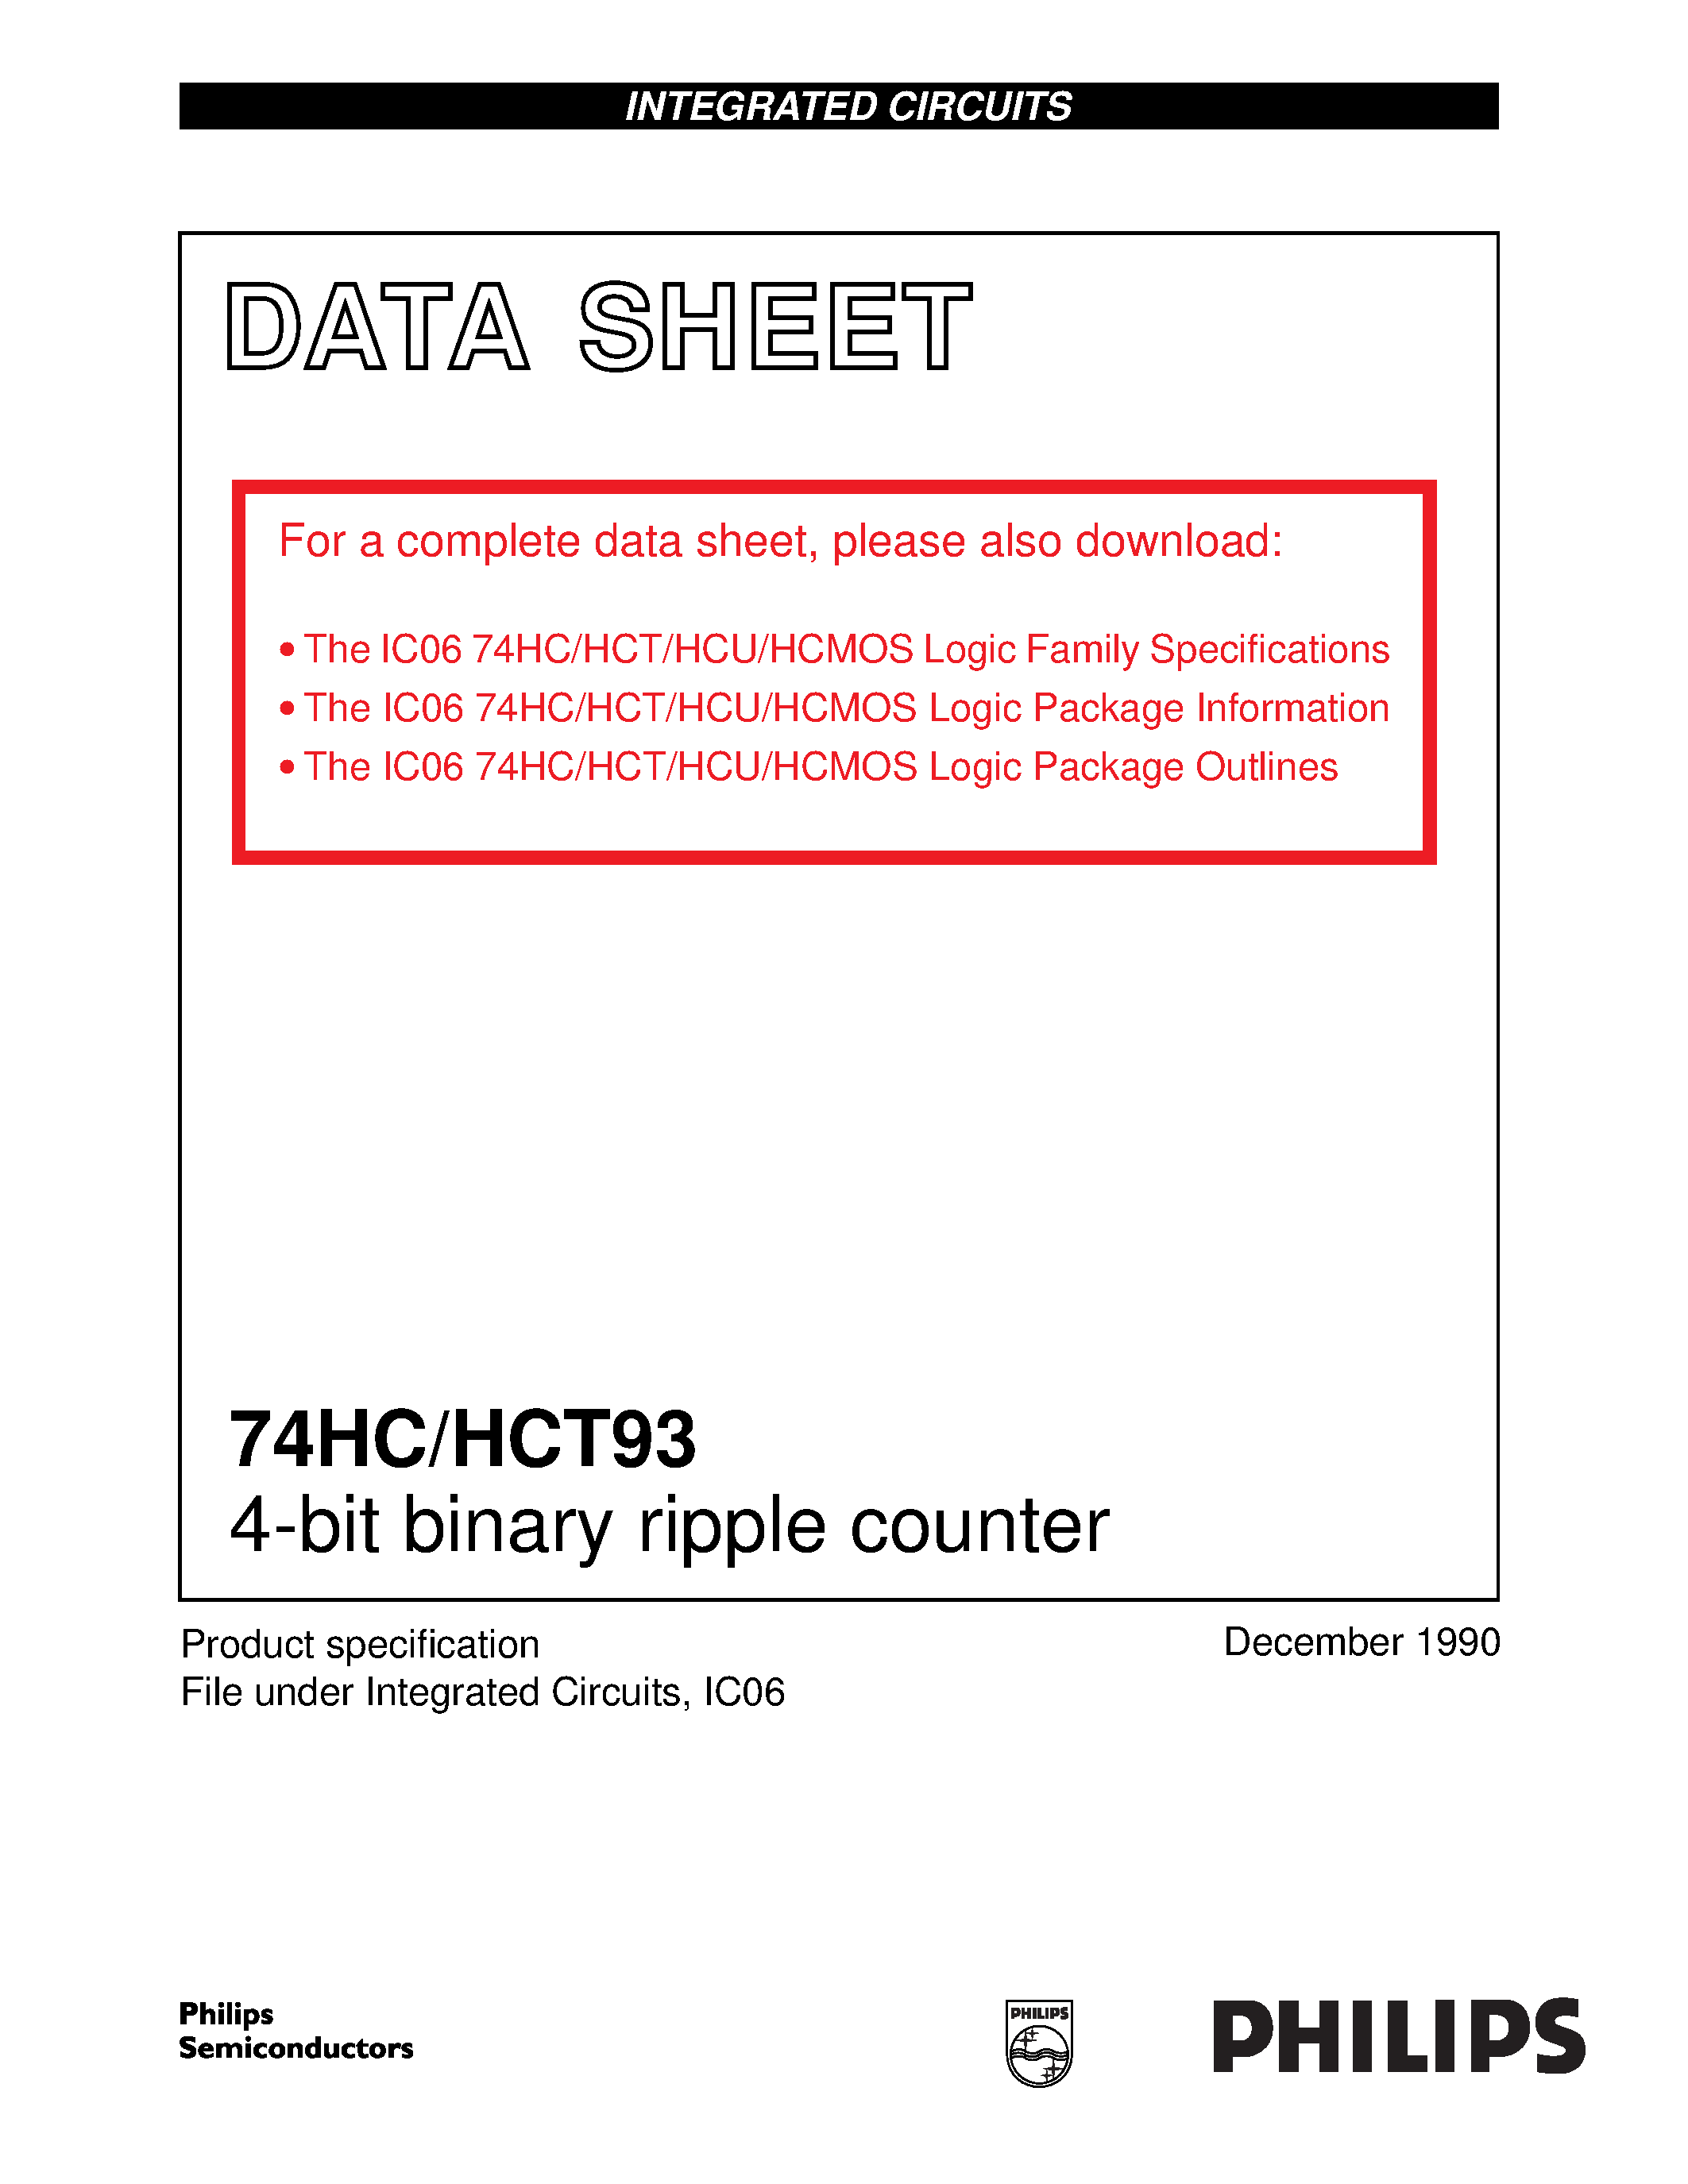 Даташит 74HCT93 - 4-bit binary ripple counter страница 1